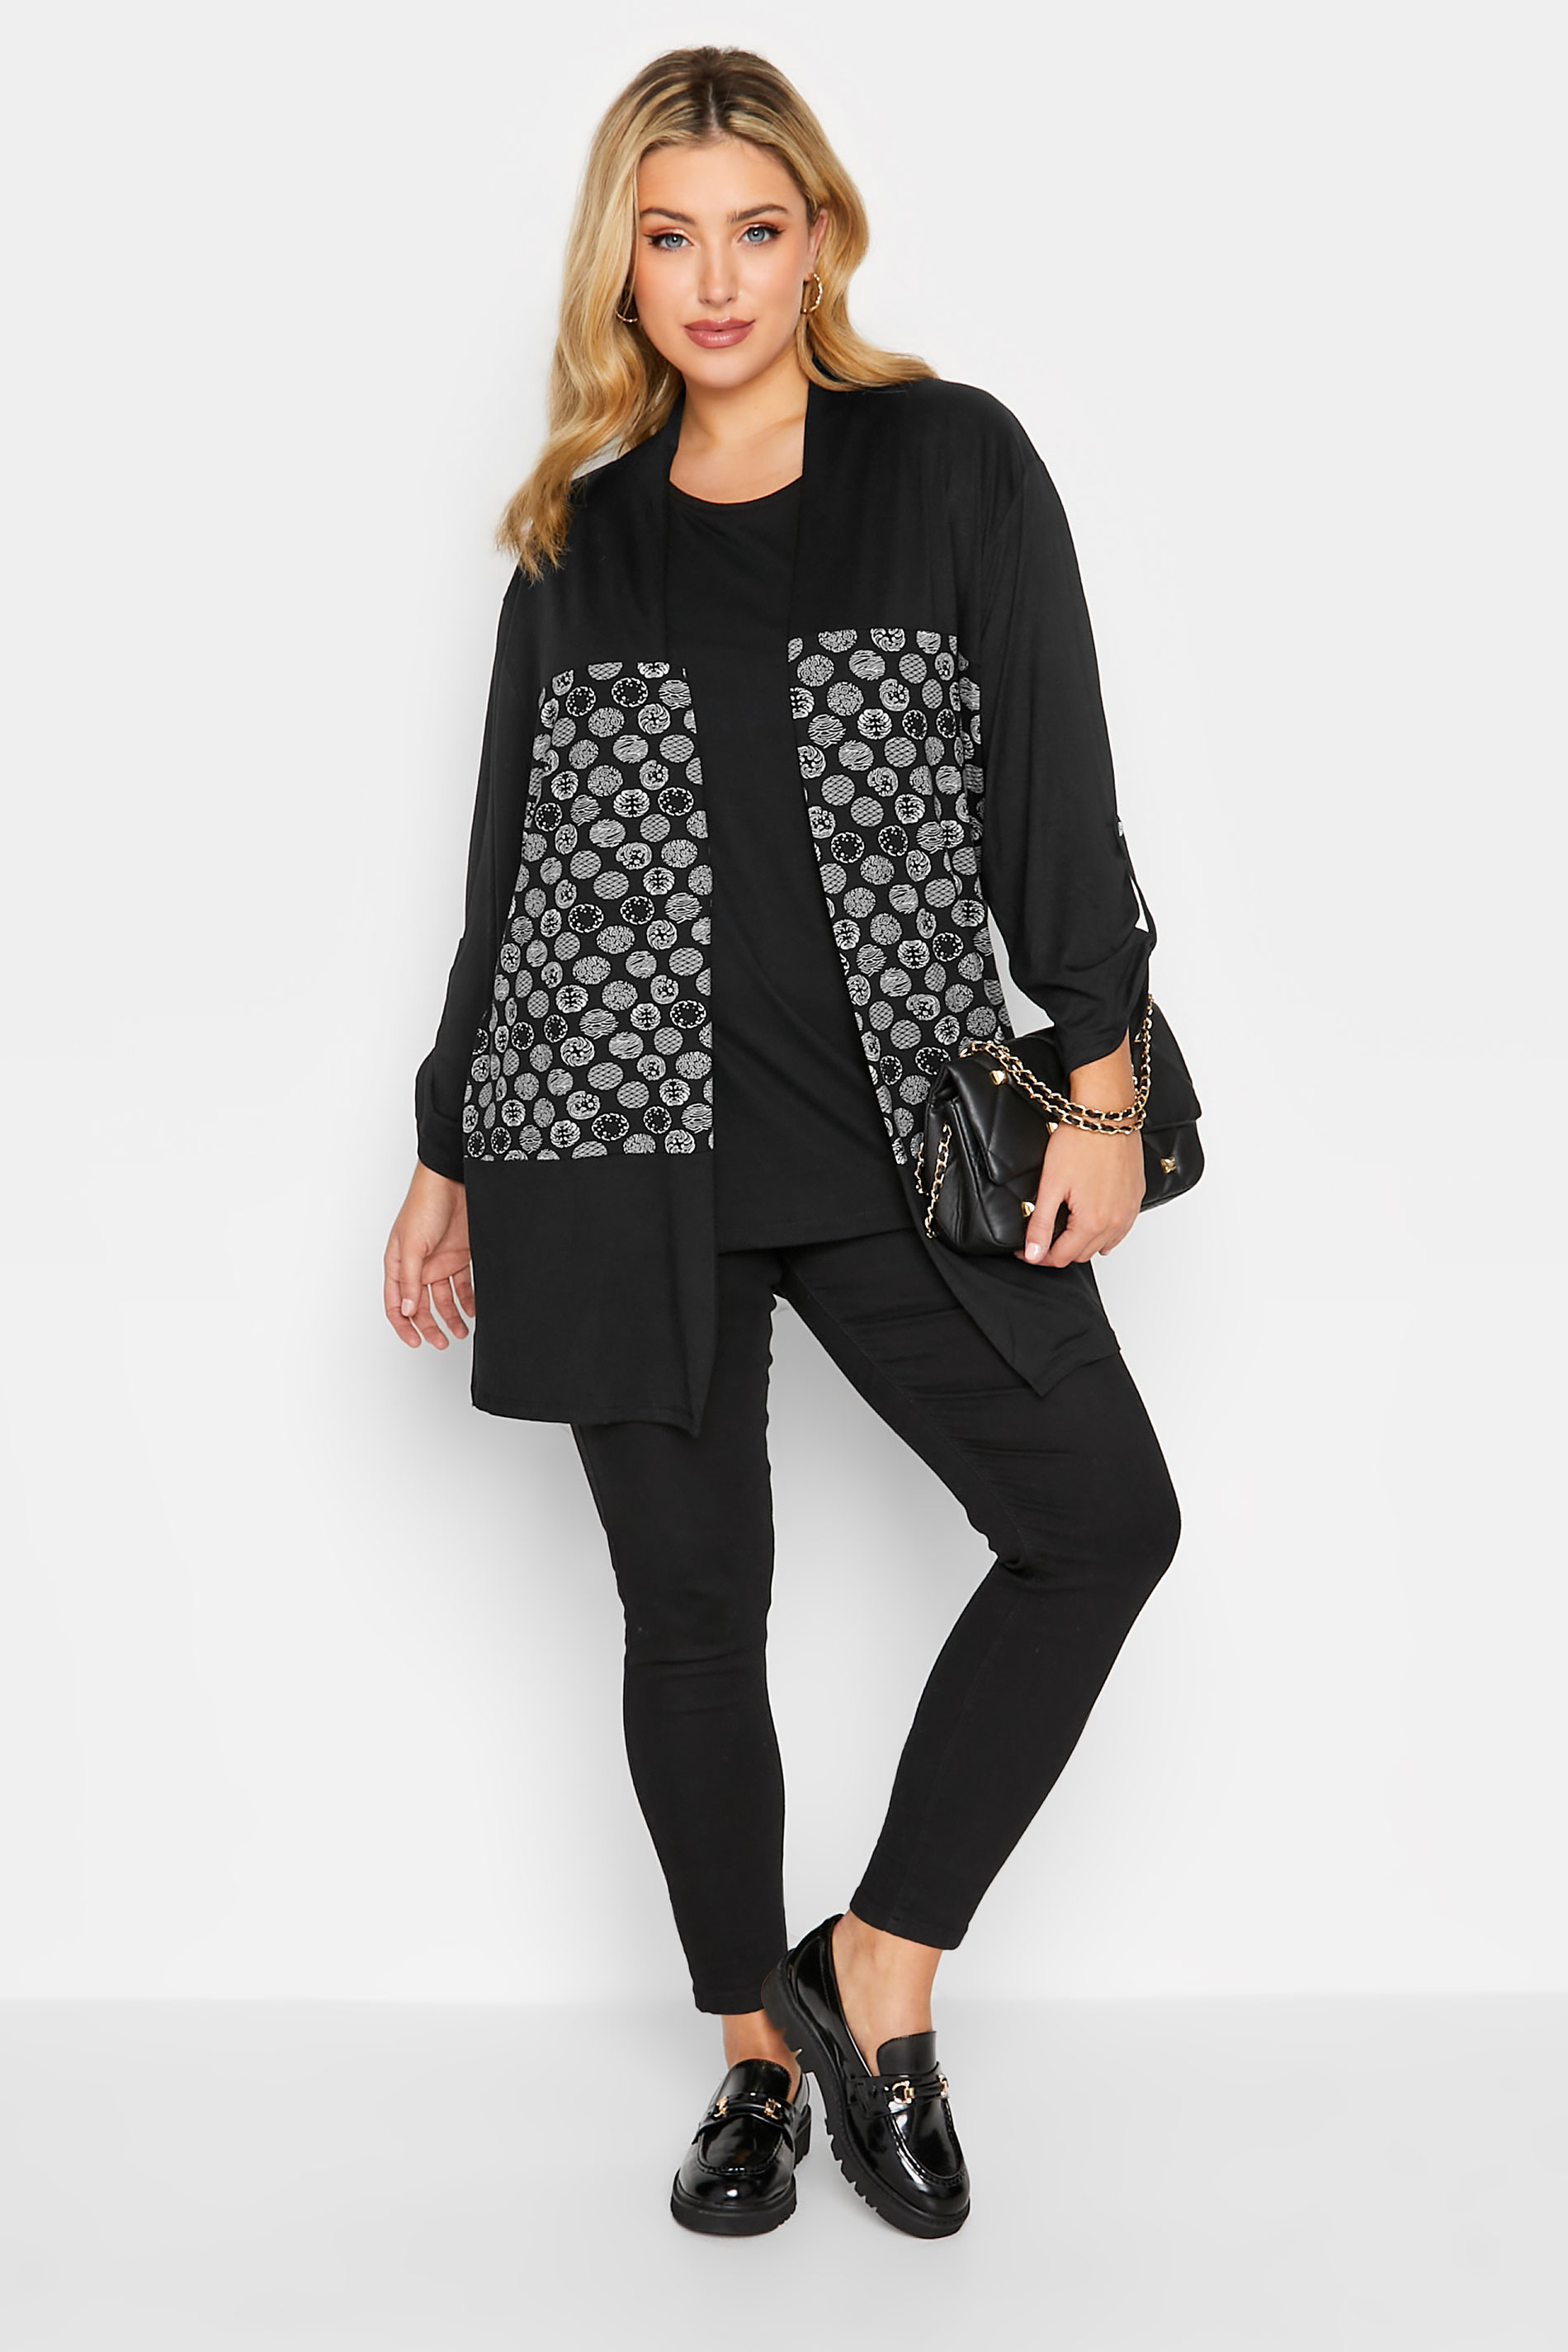 Plus Size Black Geometric Spot Print Colour Block Cardigan | Yours Clothing 2